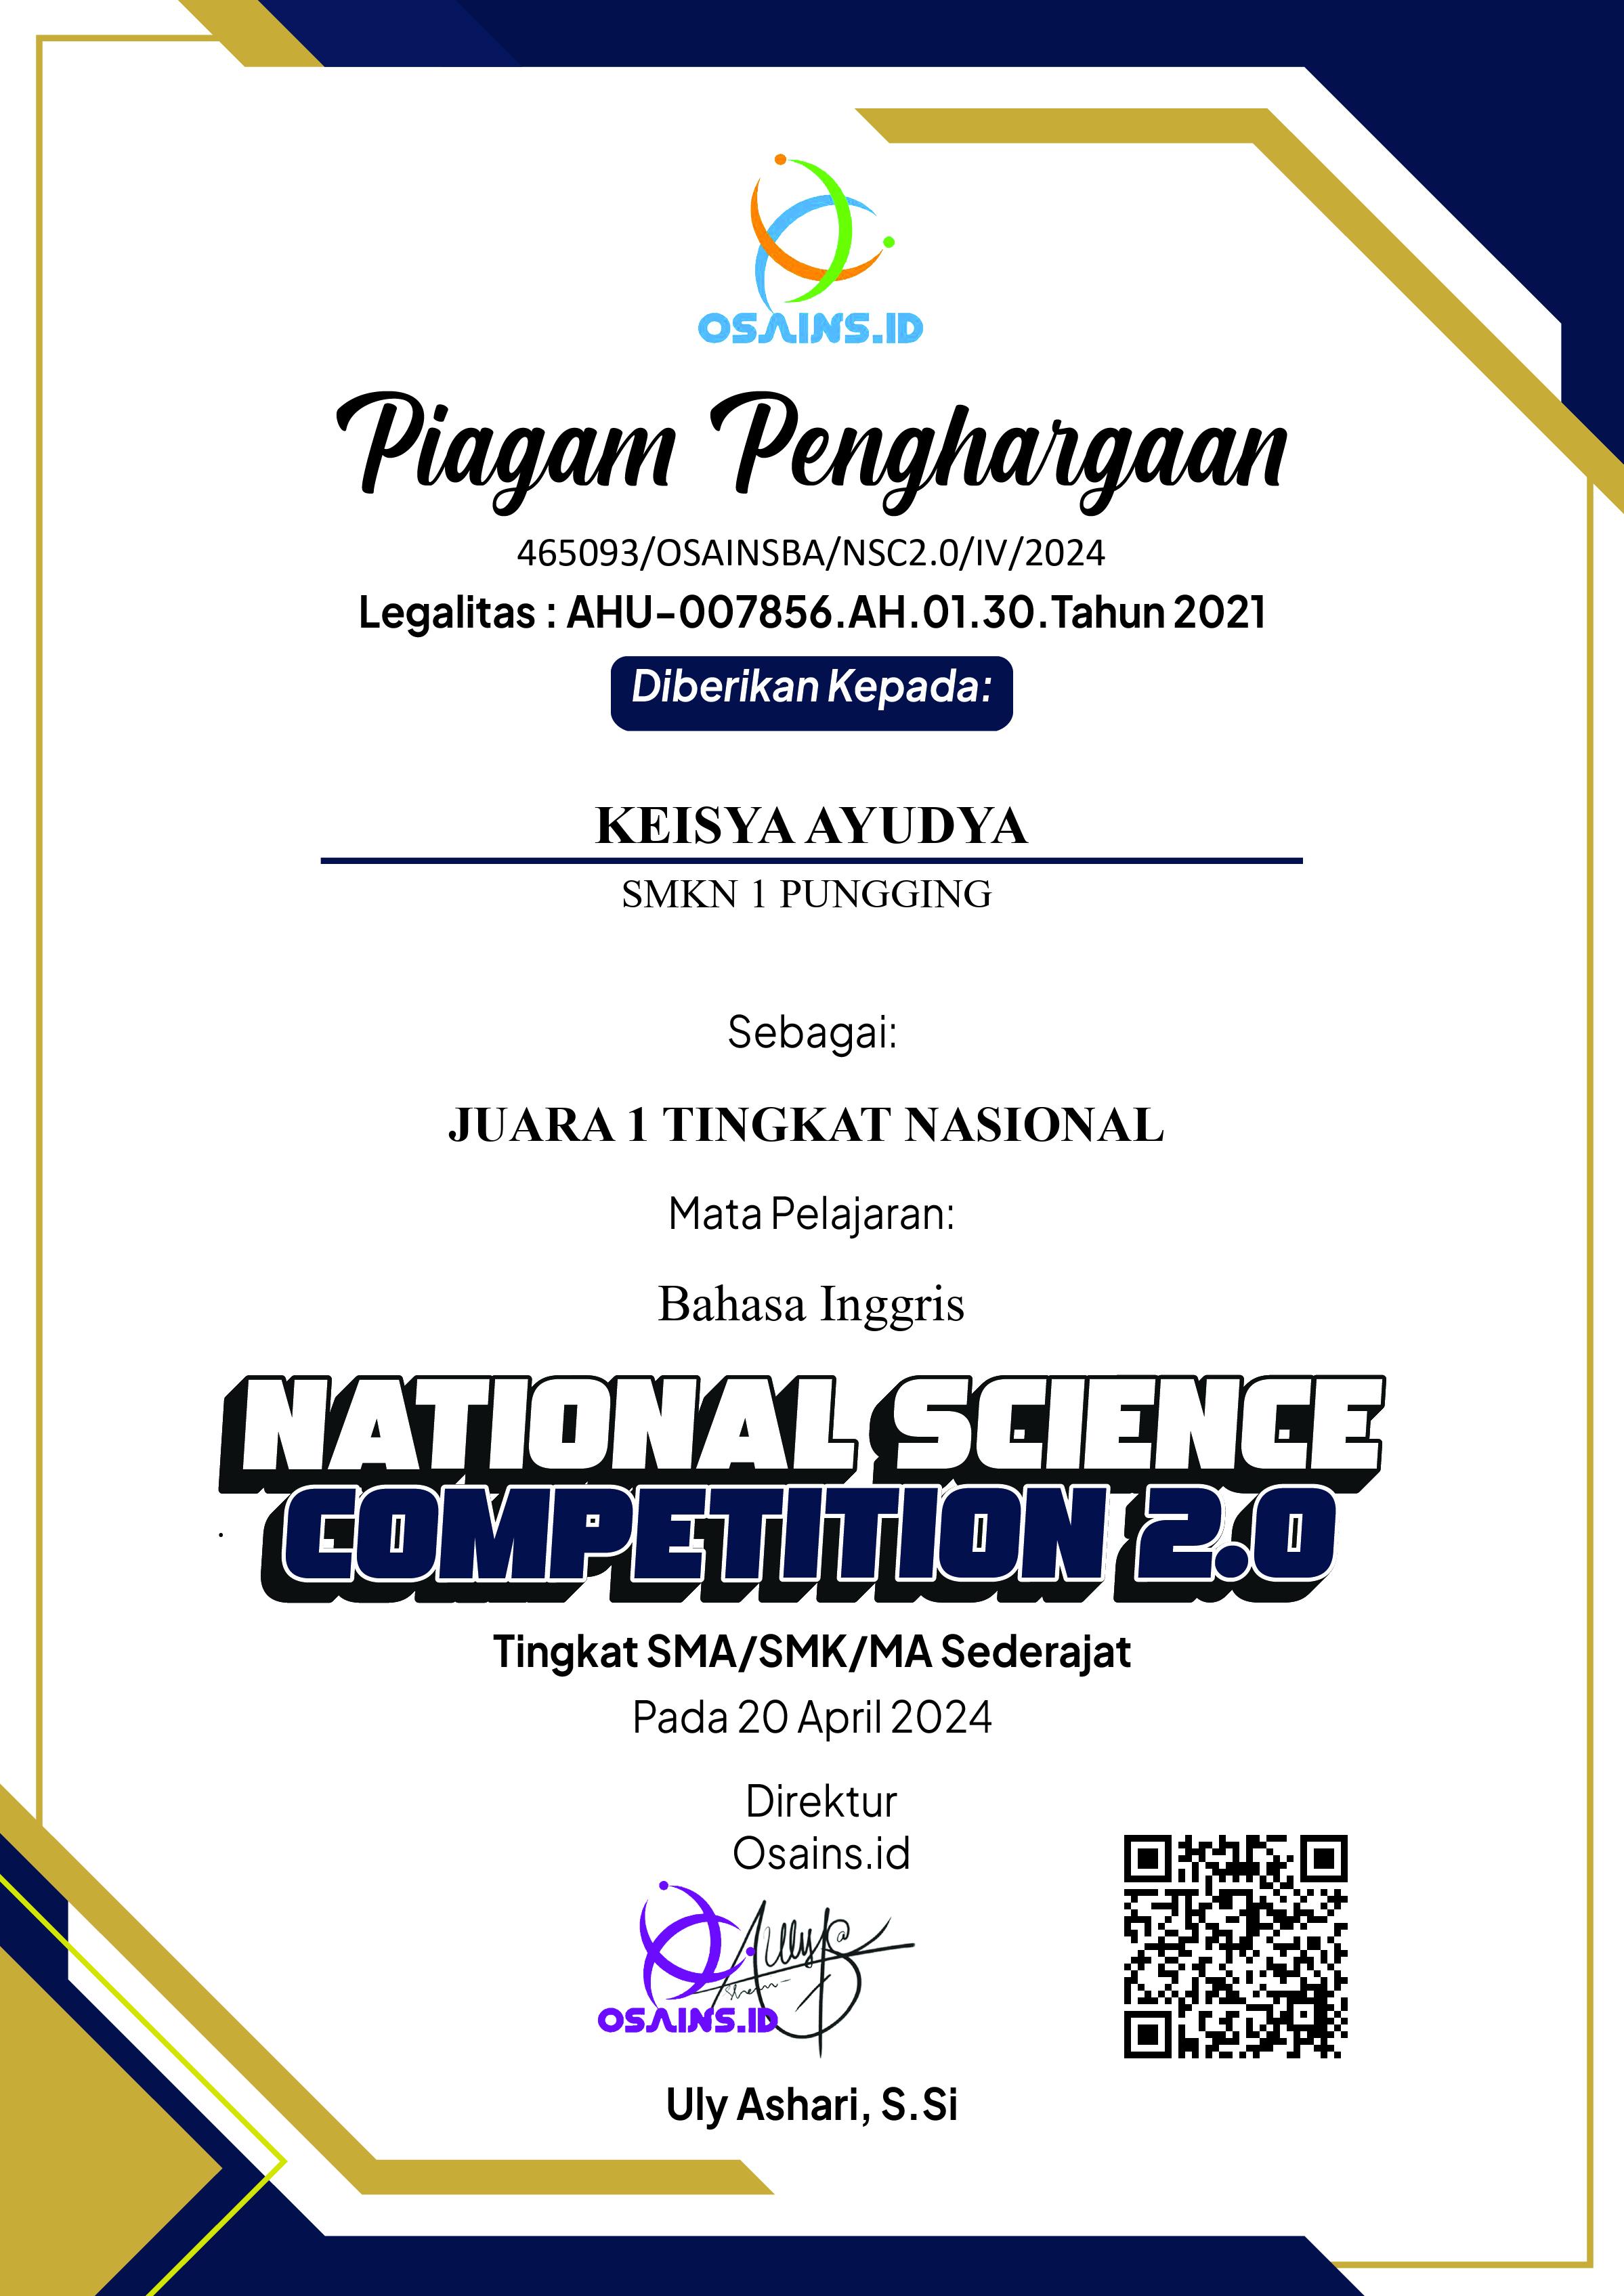 National science competition 2.0 Mata Pelajaran Bahasa Inggris